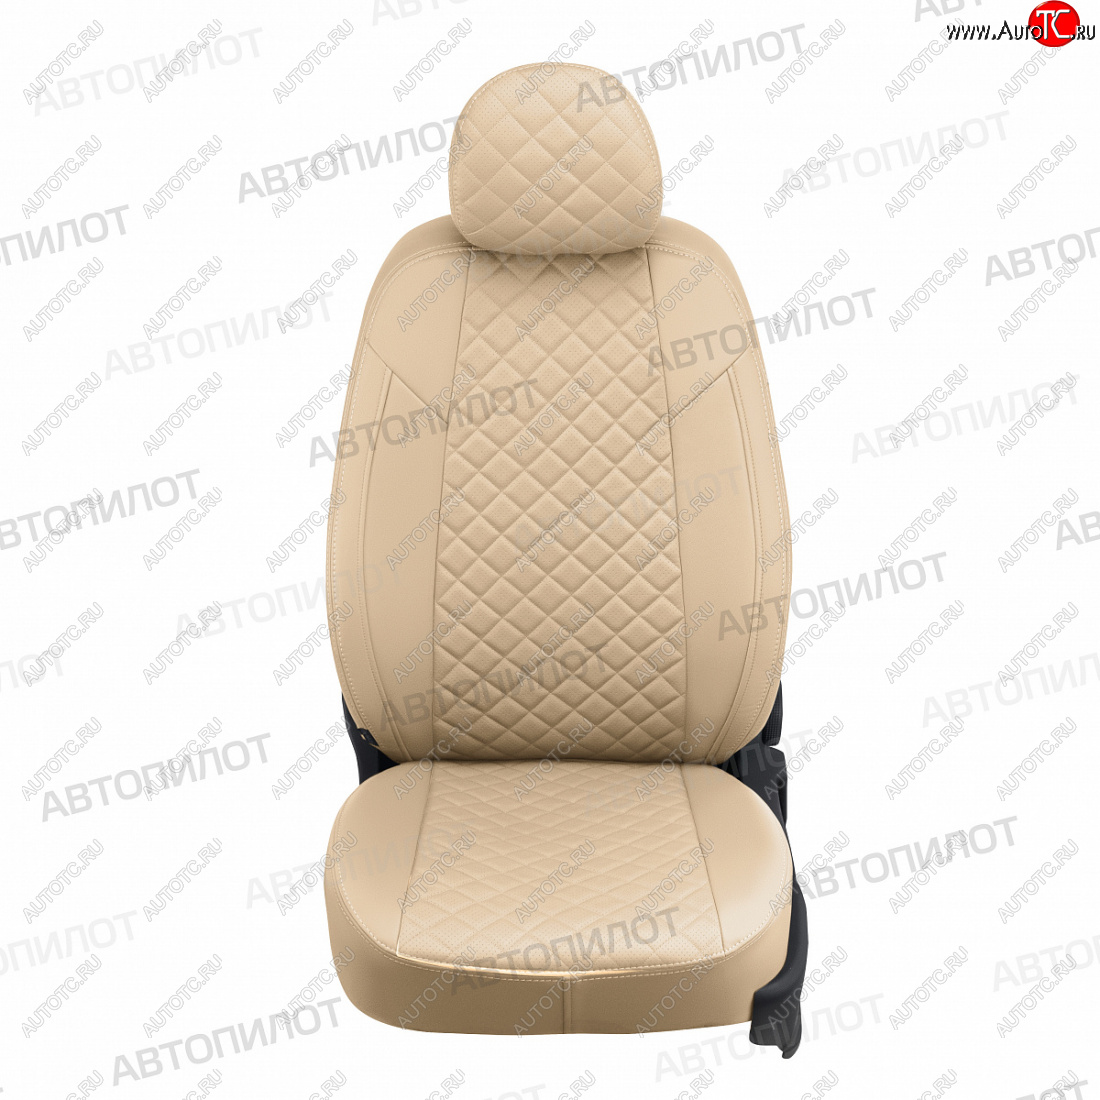 12 199 р. Чехлы сидений (экокожа, 8 мест) Автопилот Ромб  Hyundai Staria  US4 (2021-2022) (бежевый)